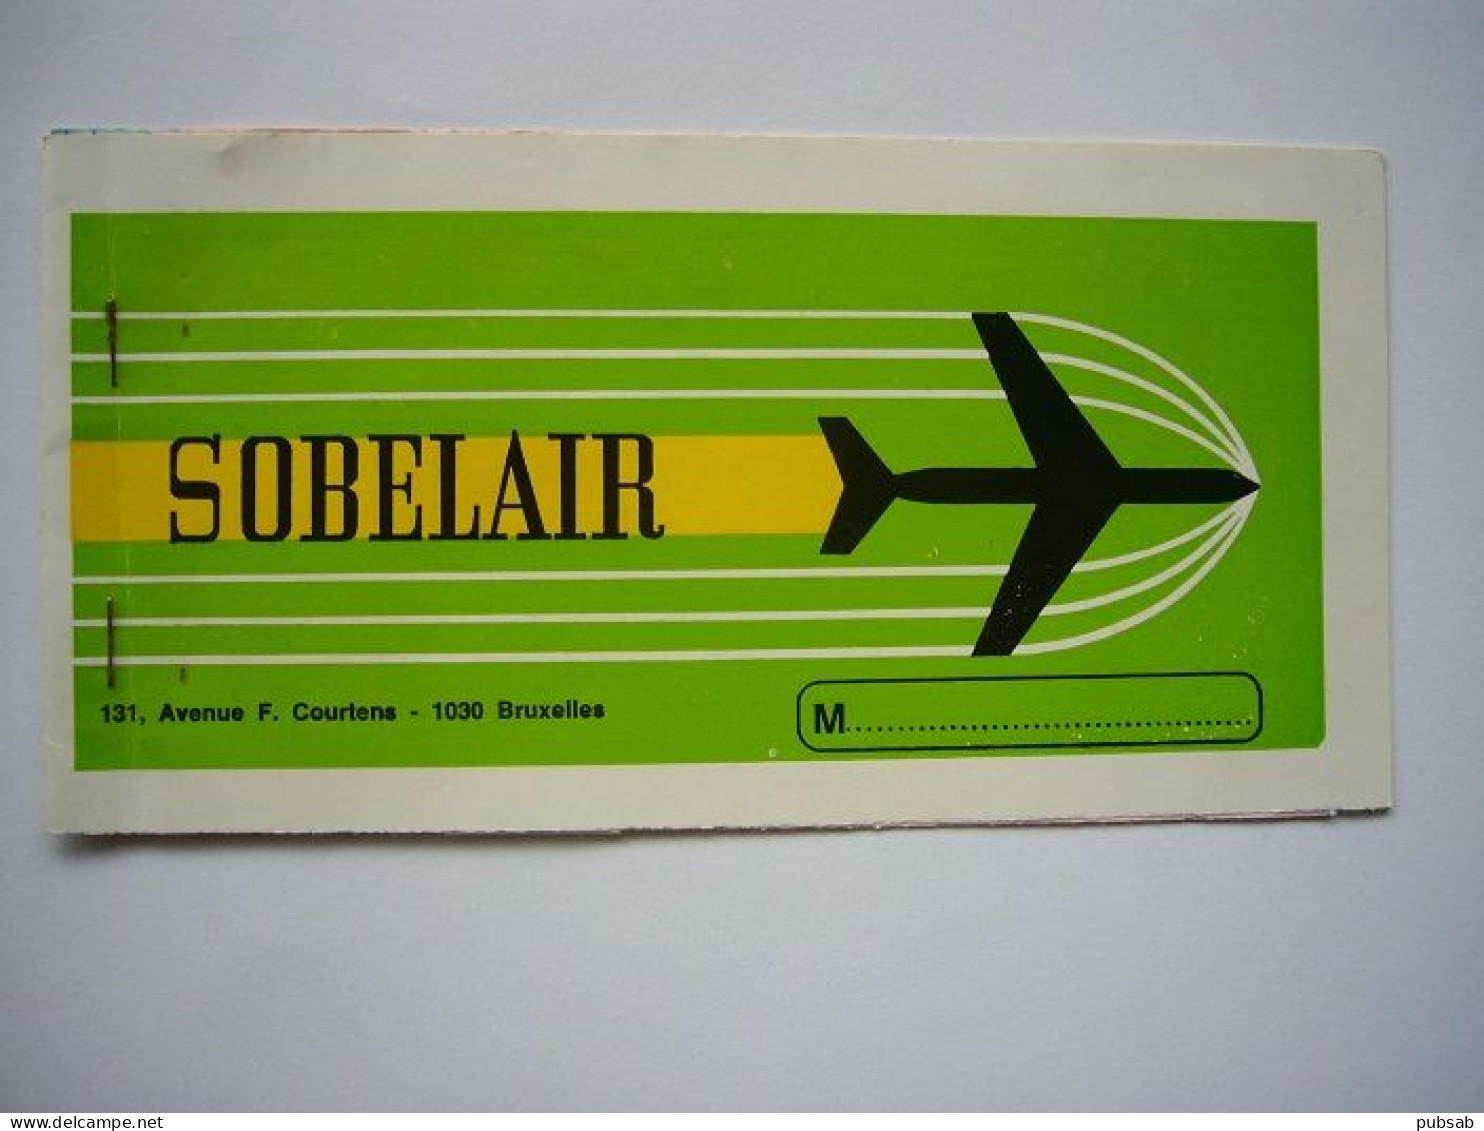 Avion / Airplane / SOBELAIR / Airline Ticket / Madeira To Brussels / 05.08.74. - Billetes